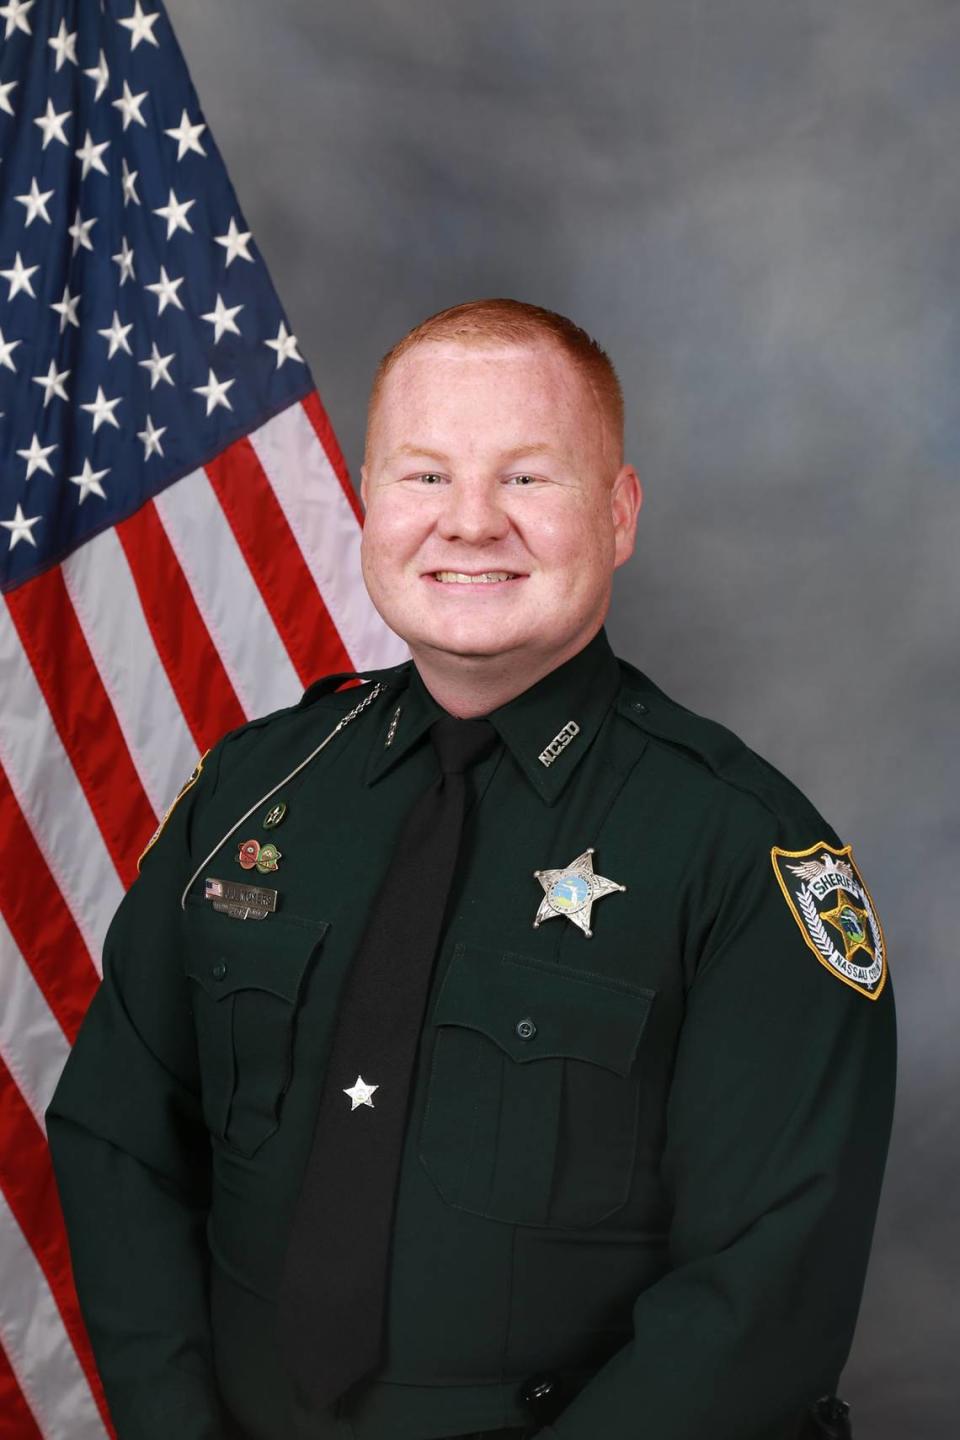 Nassau County Sheriff’s Office Deputy Josh Moyers